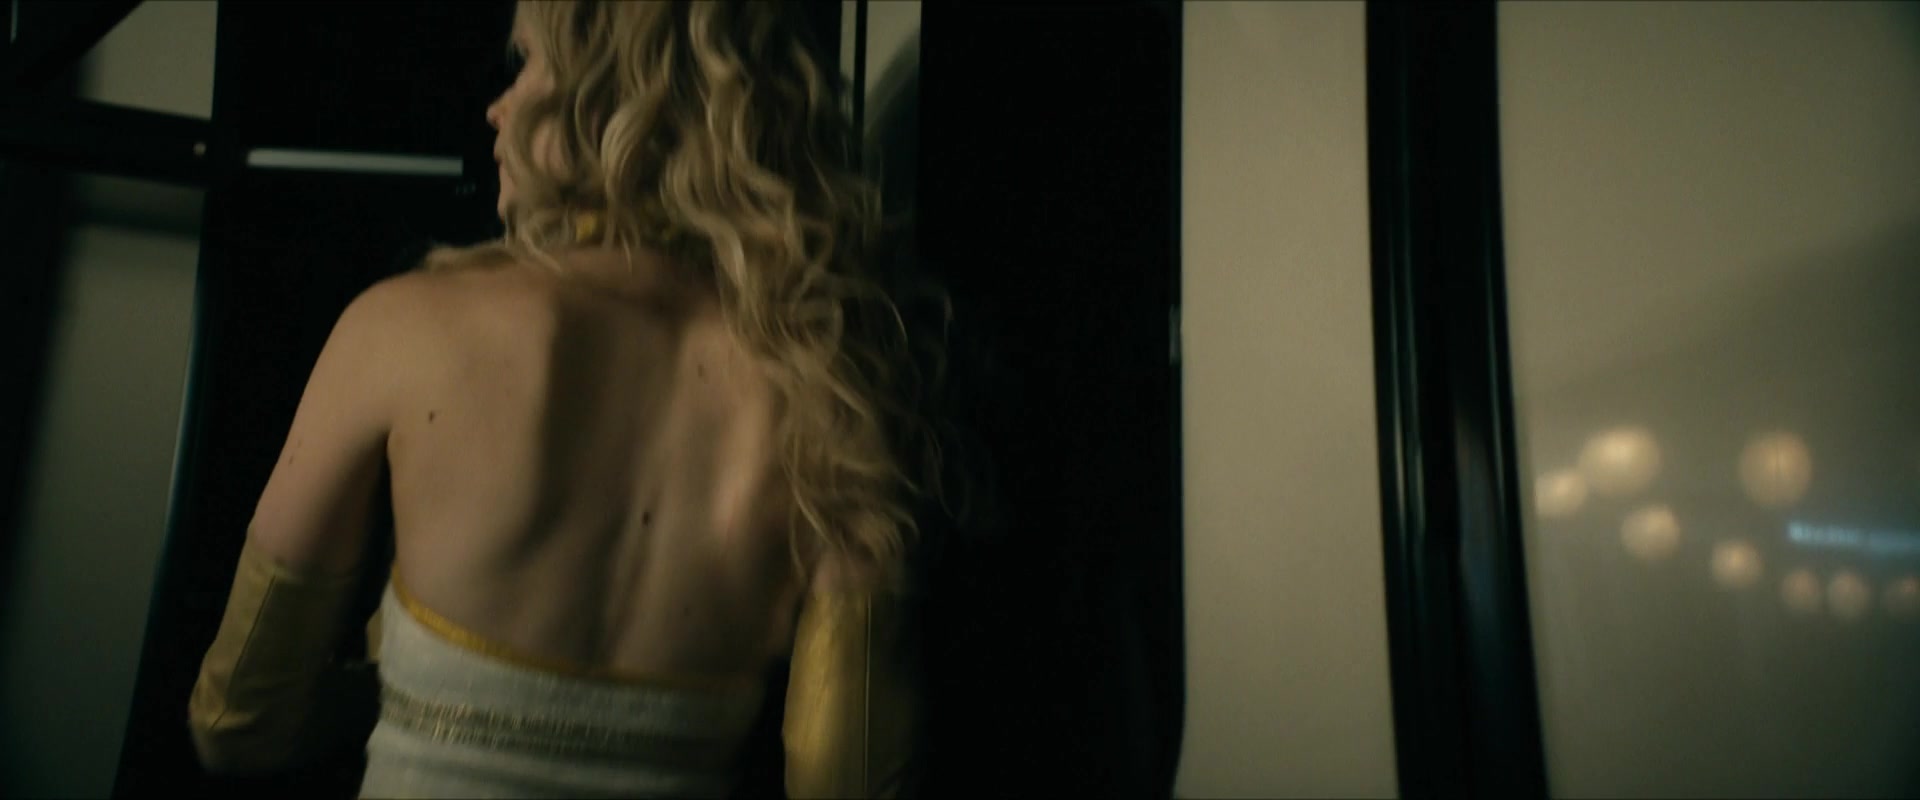 Erin Moriarty, Aya Cash naked - The Boys (2020) (Season 2, Episode 5) -  Erotic Art Sex Video